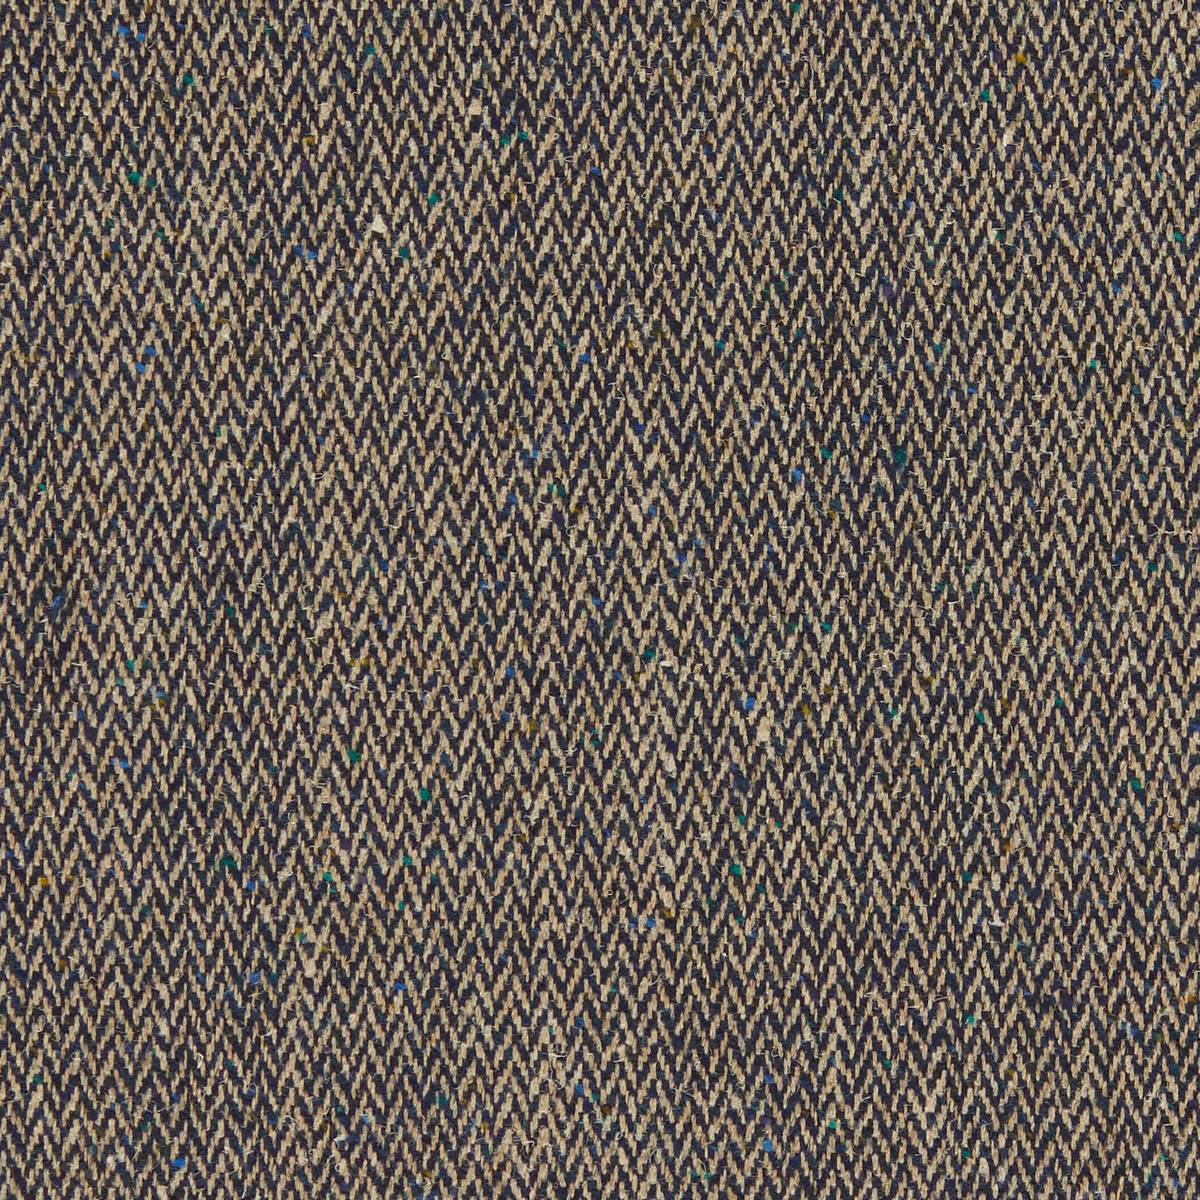 Brunswick Indigo Fabric by William Morris & Co.